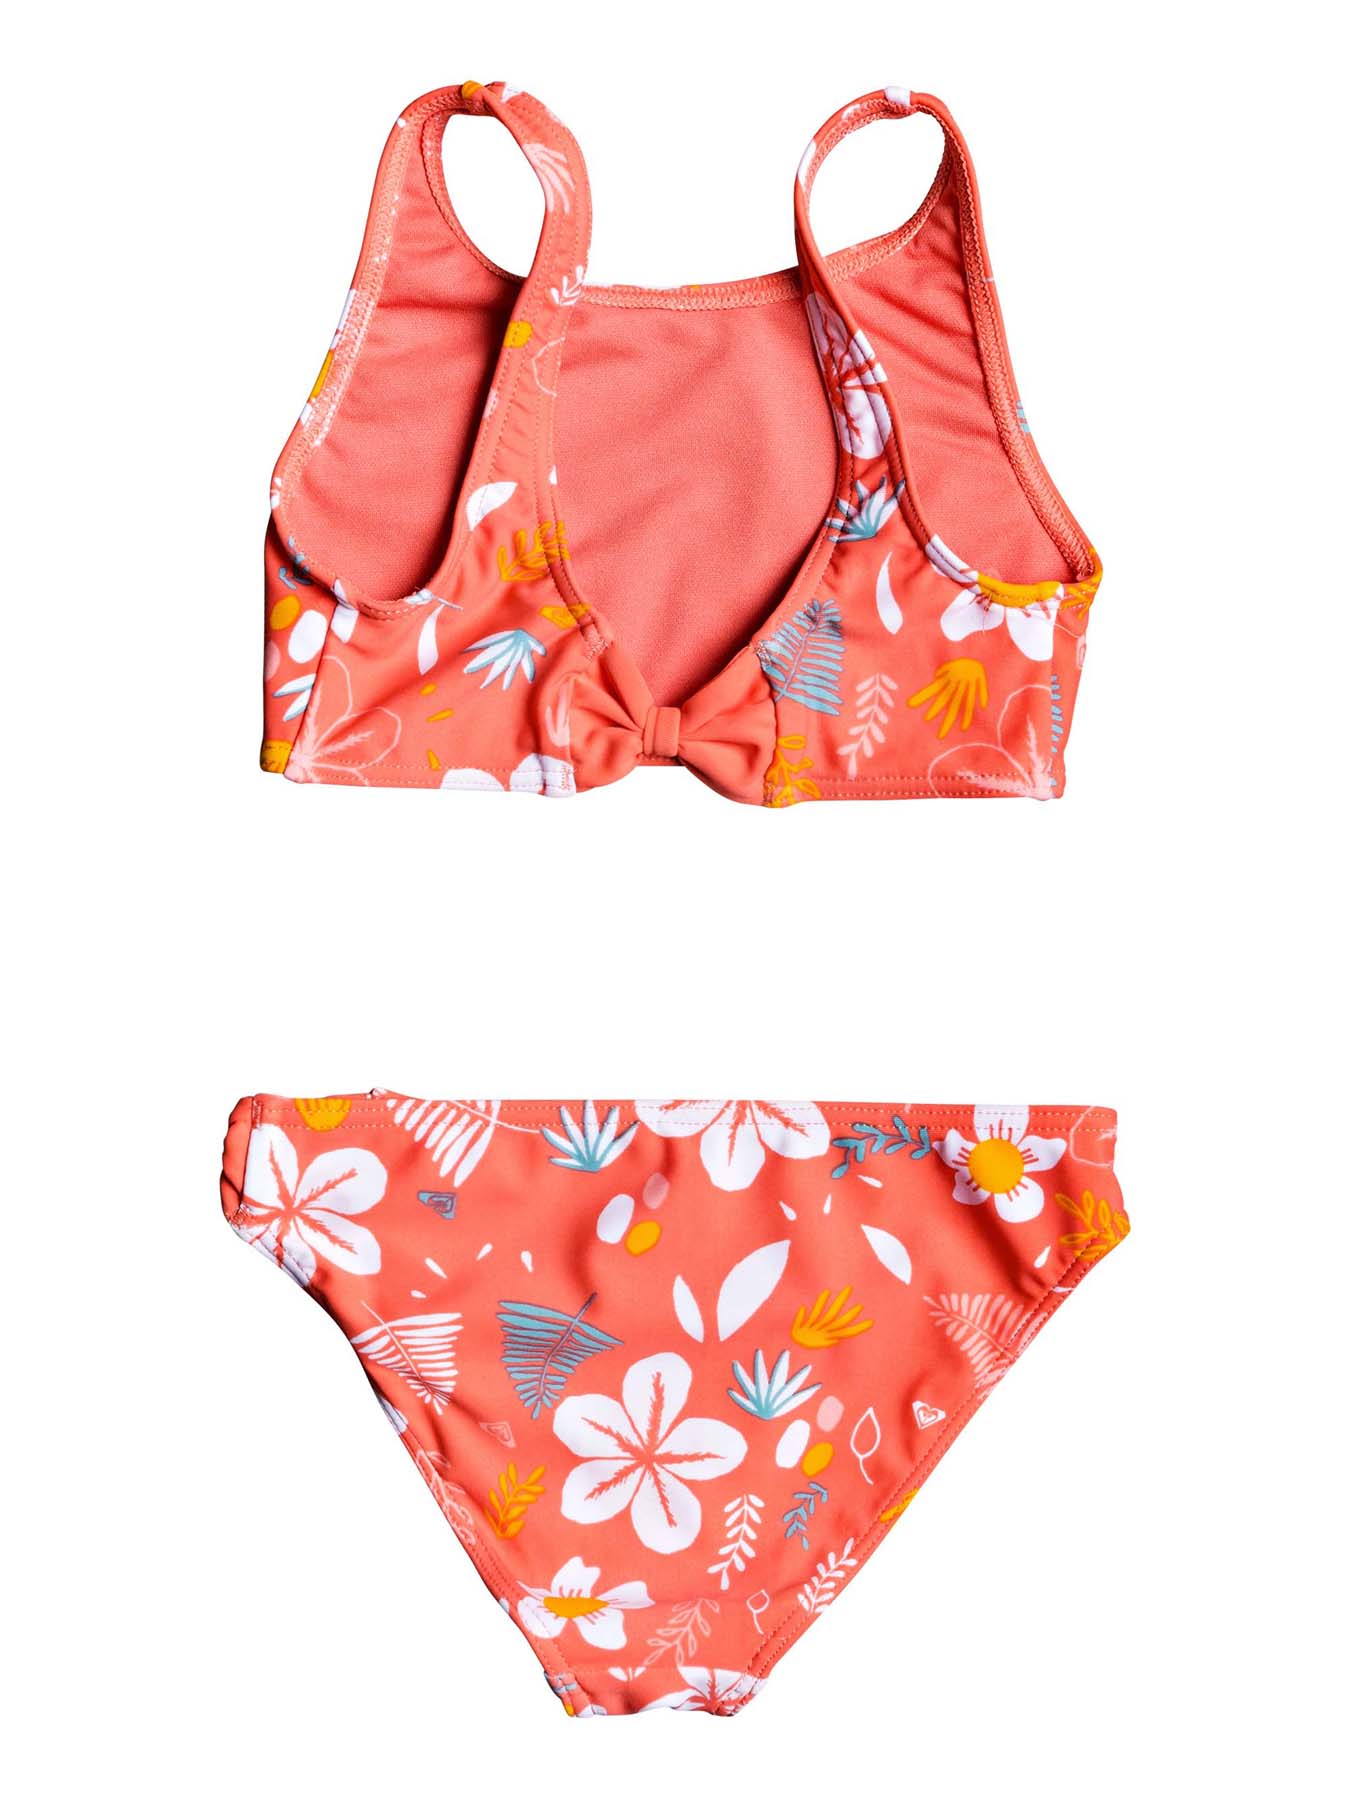 Roxy Girls 2-7 Fruity Shake Crop Top Bikini Set - Dubarry | SurfStitch